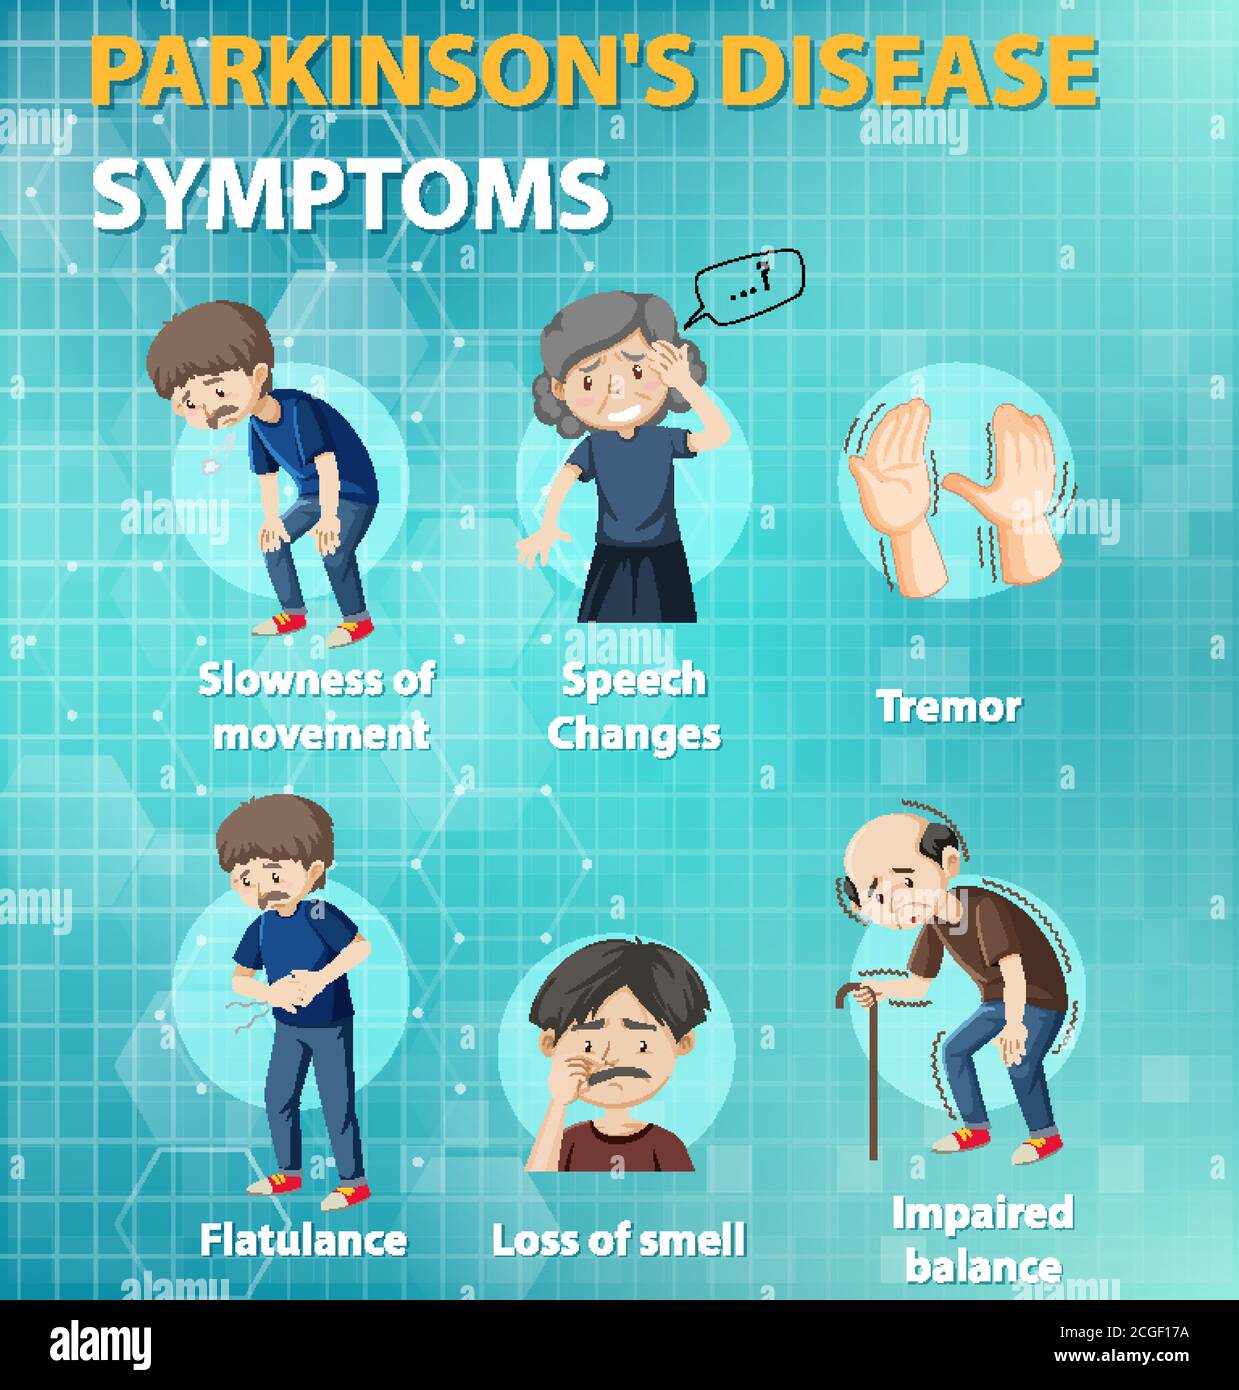 Parkinson disease symptoms infographic illustration Stock Vector Image ...